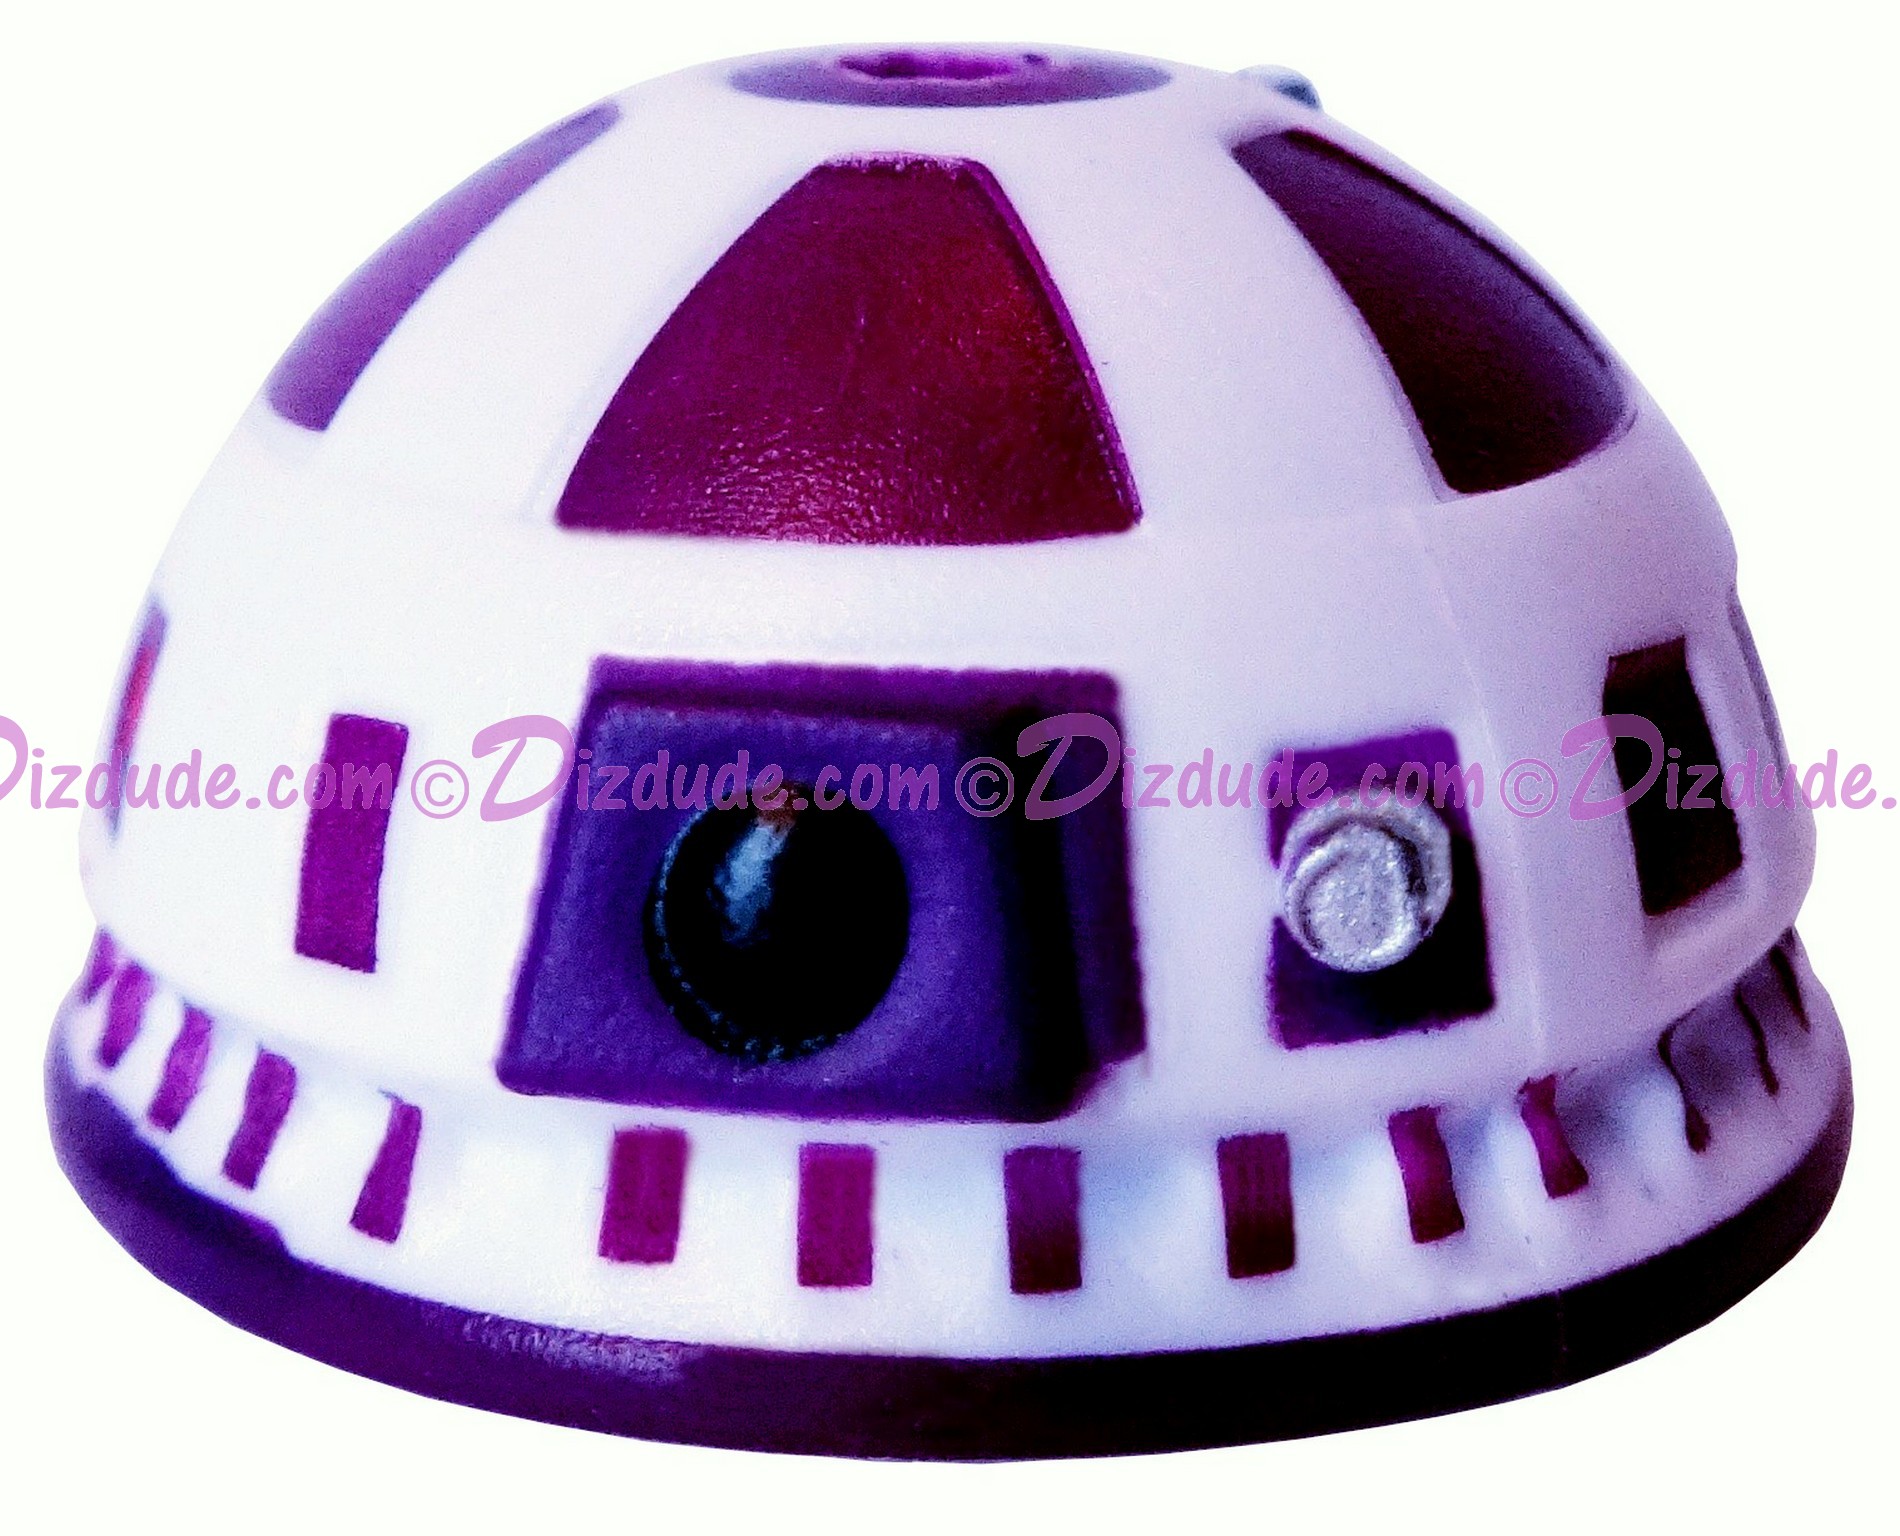 R9 White & Purple Astromech Droid Dome ~ Series 2 from Disney Star Wars Build-A-Droid Factory © Dizdude.com